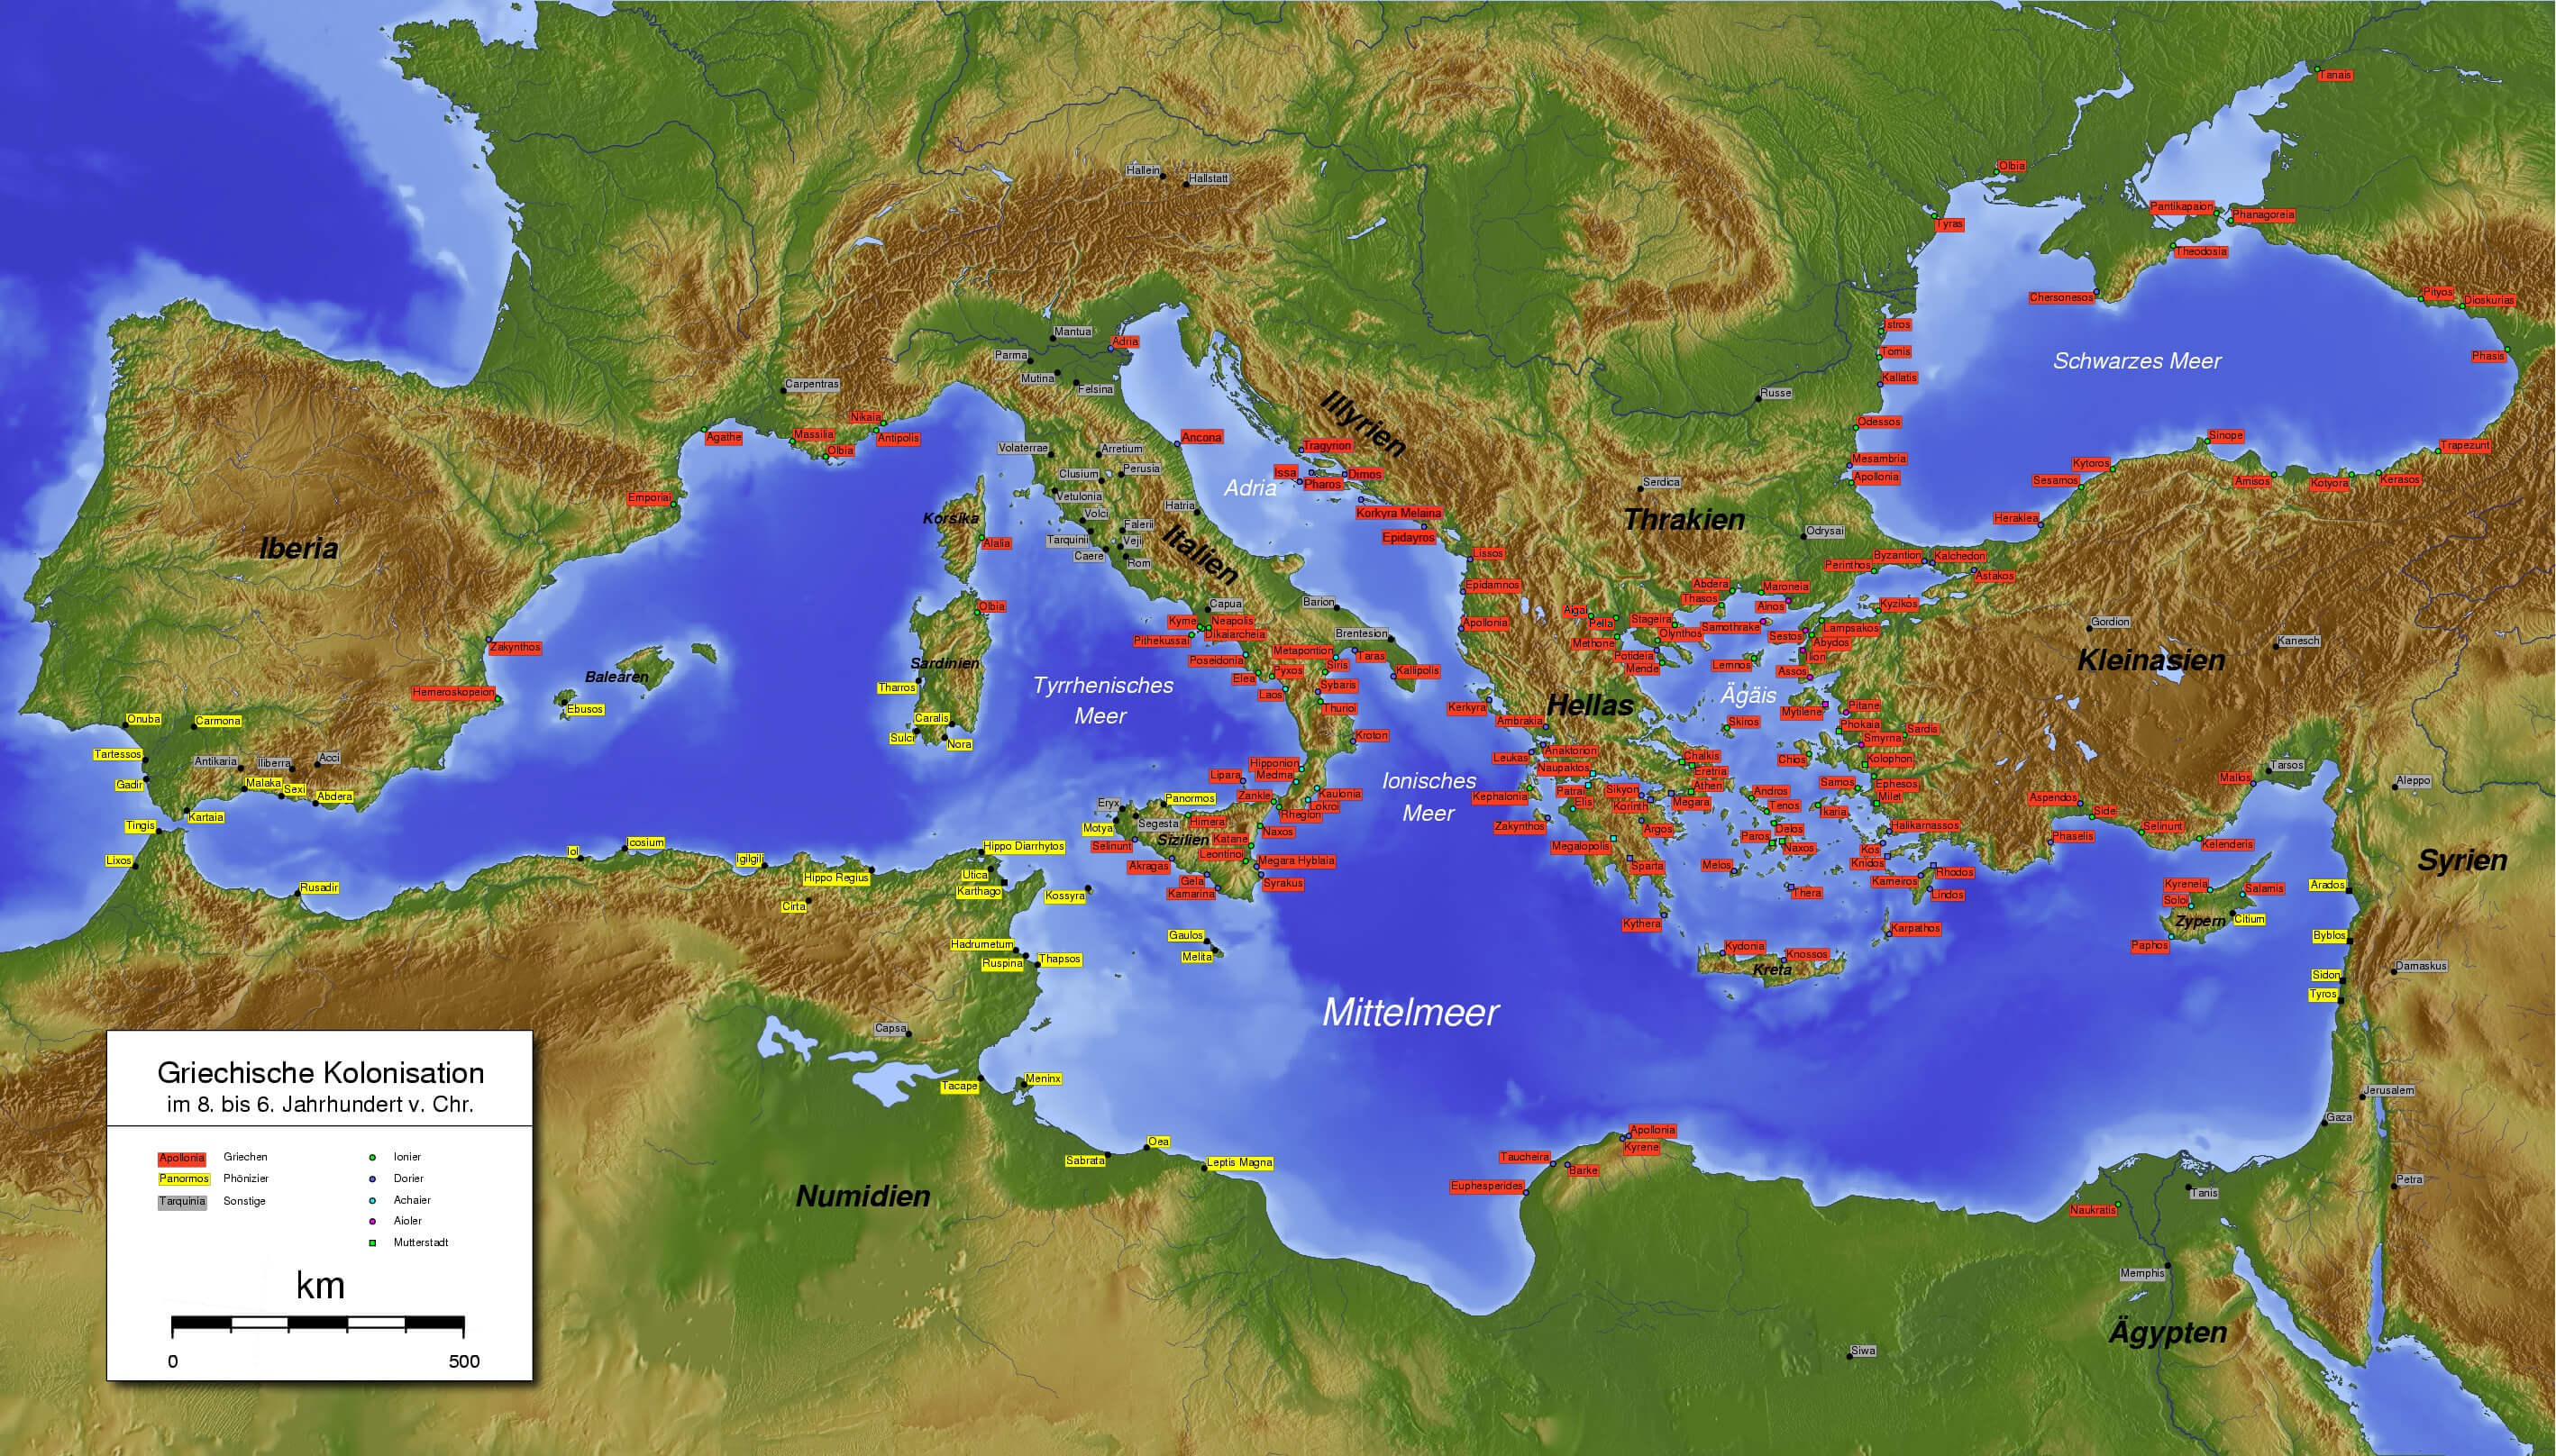 Polis griegas del siglo VIII al VI a. C